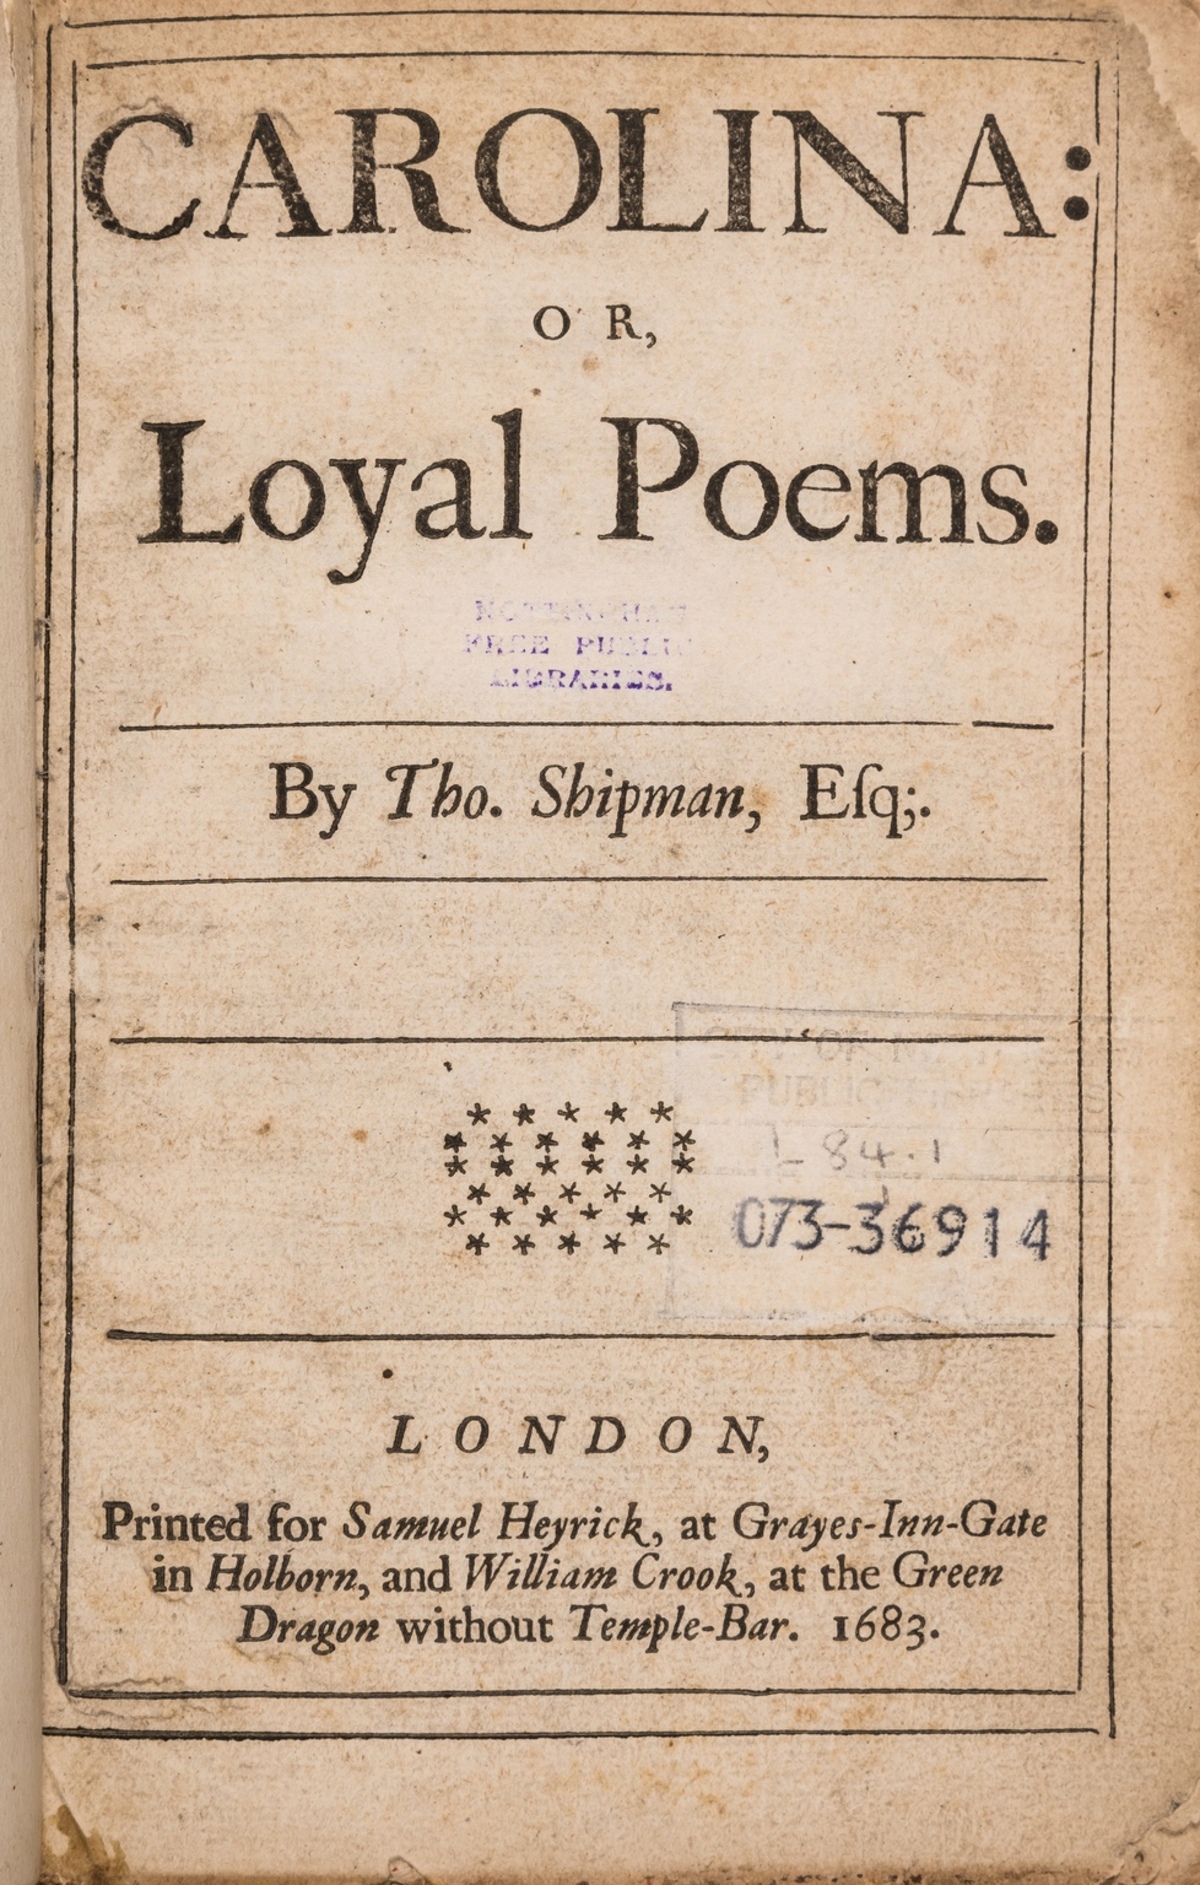 Shipman (Thomas) Carolina: Or, Loyal Poems, only edition, modern calf-backed marbled boards, 1683.